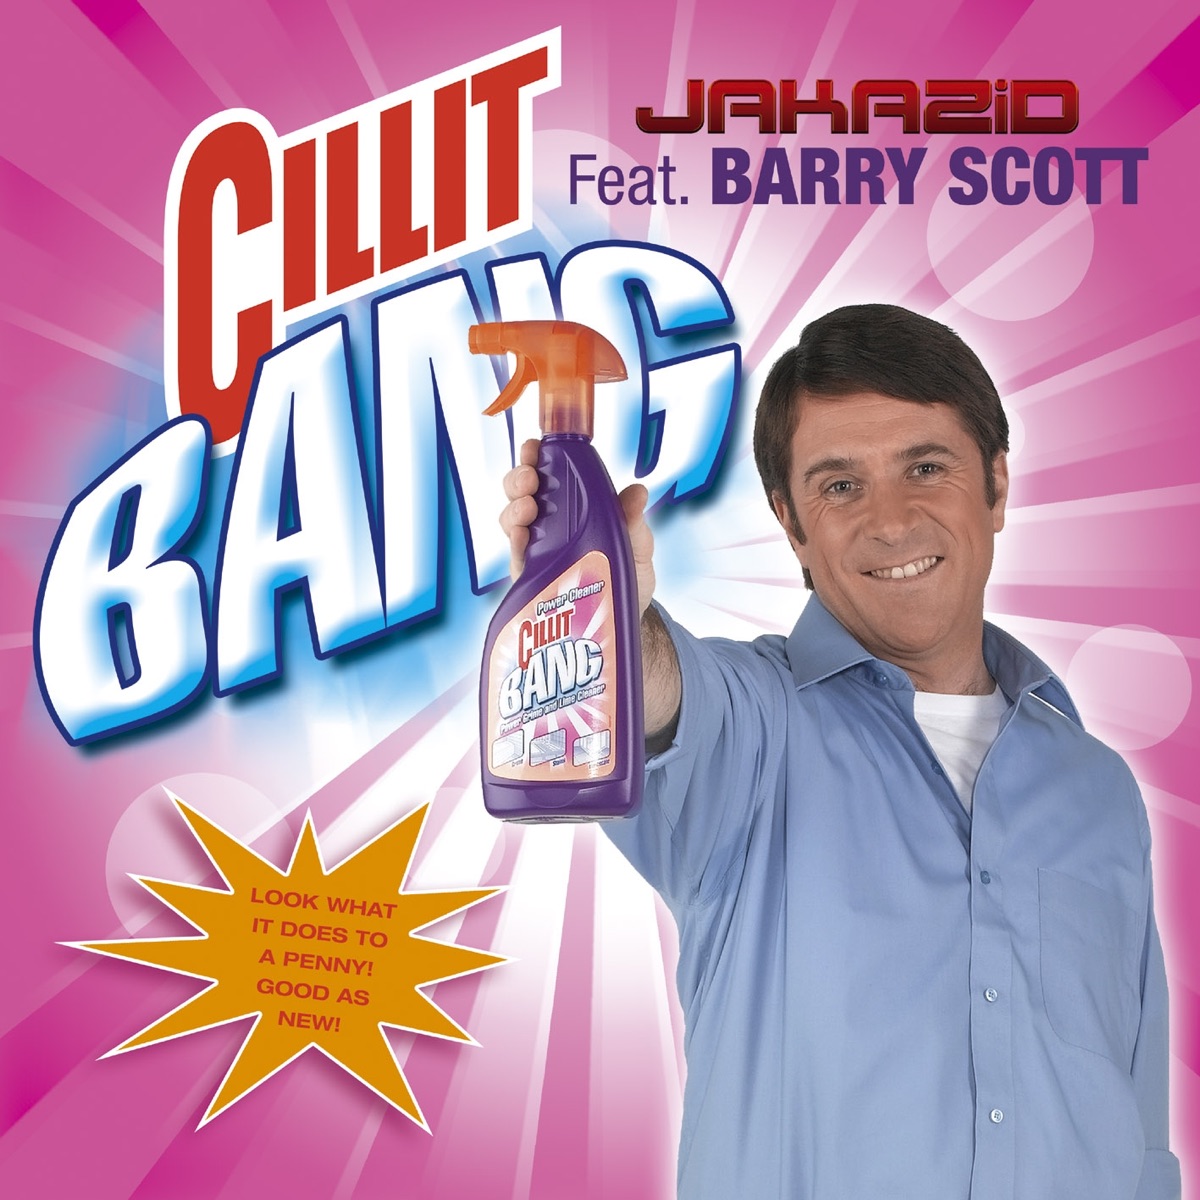 Cillit Bang - EP - Album by Jakazid featuring Barry Scott - Apple Music